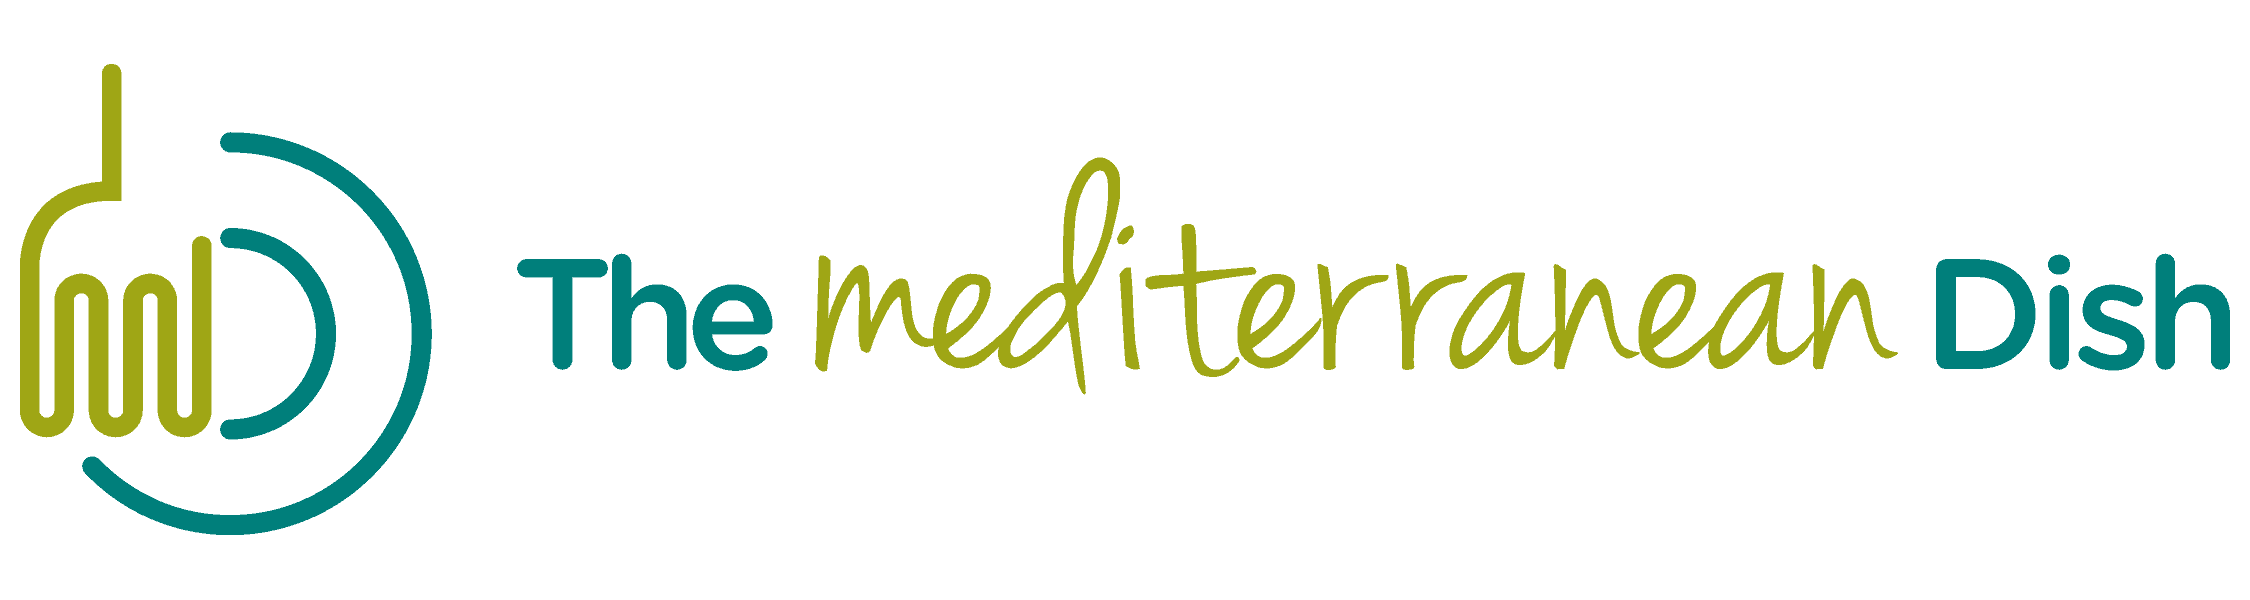 Mediterranean Recipes & Lifestyle logo